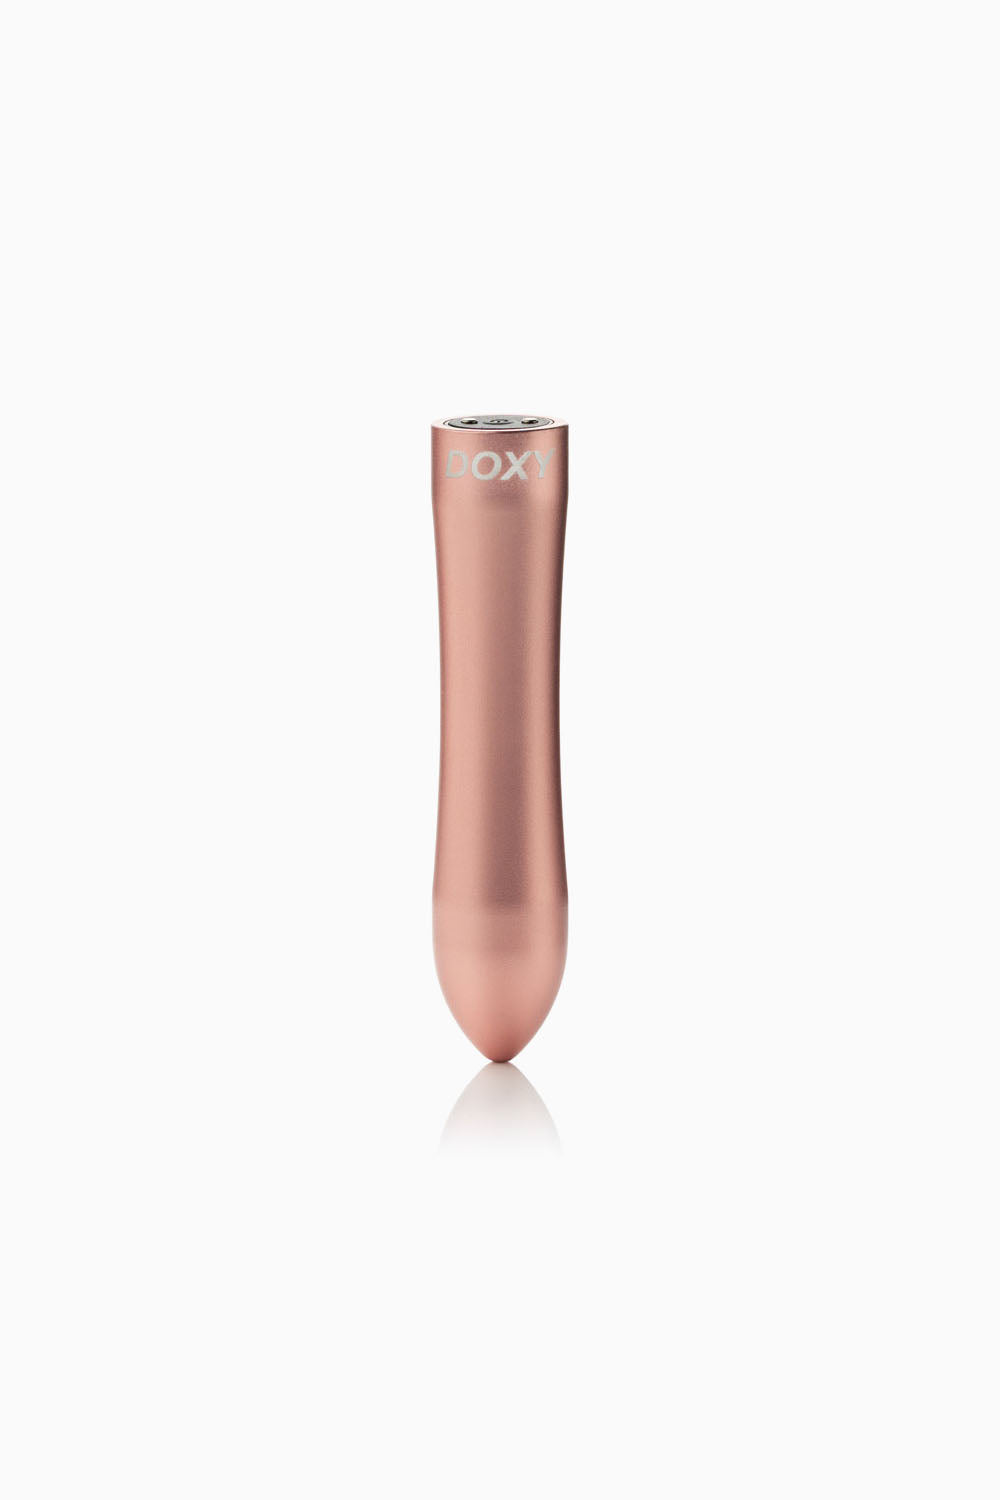 Doxy Vibrating Bullet, Pink, 12 cm